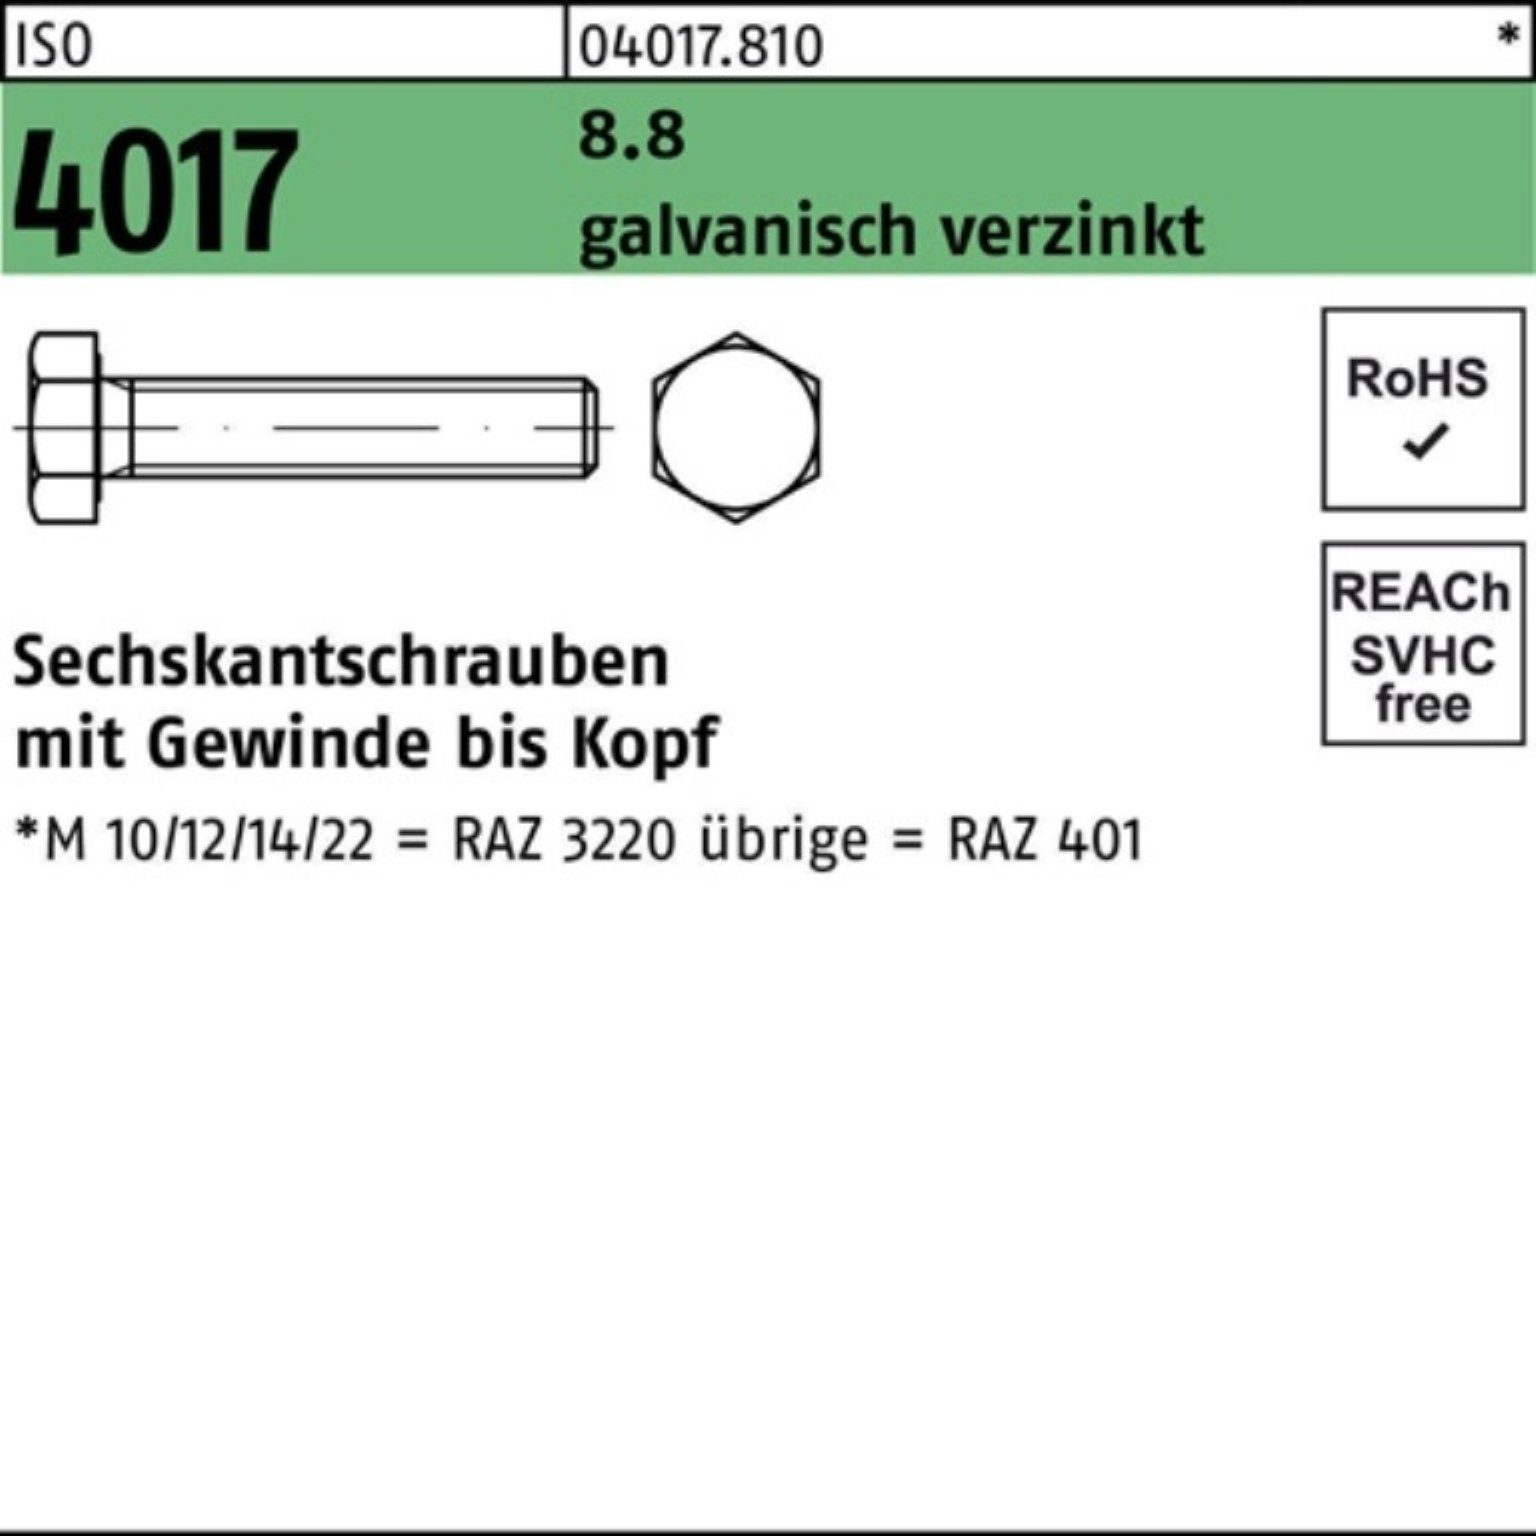 Bufab Sechskantschraube 100er 1 galv.verz. VG M20x 8.8 Sechskantschraube ISO Pack St 340 4017